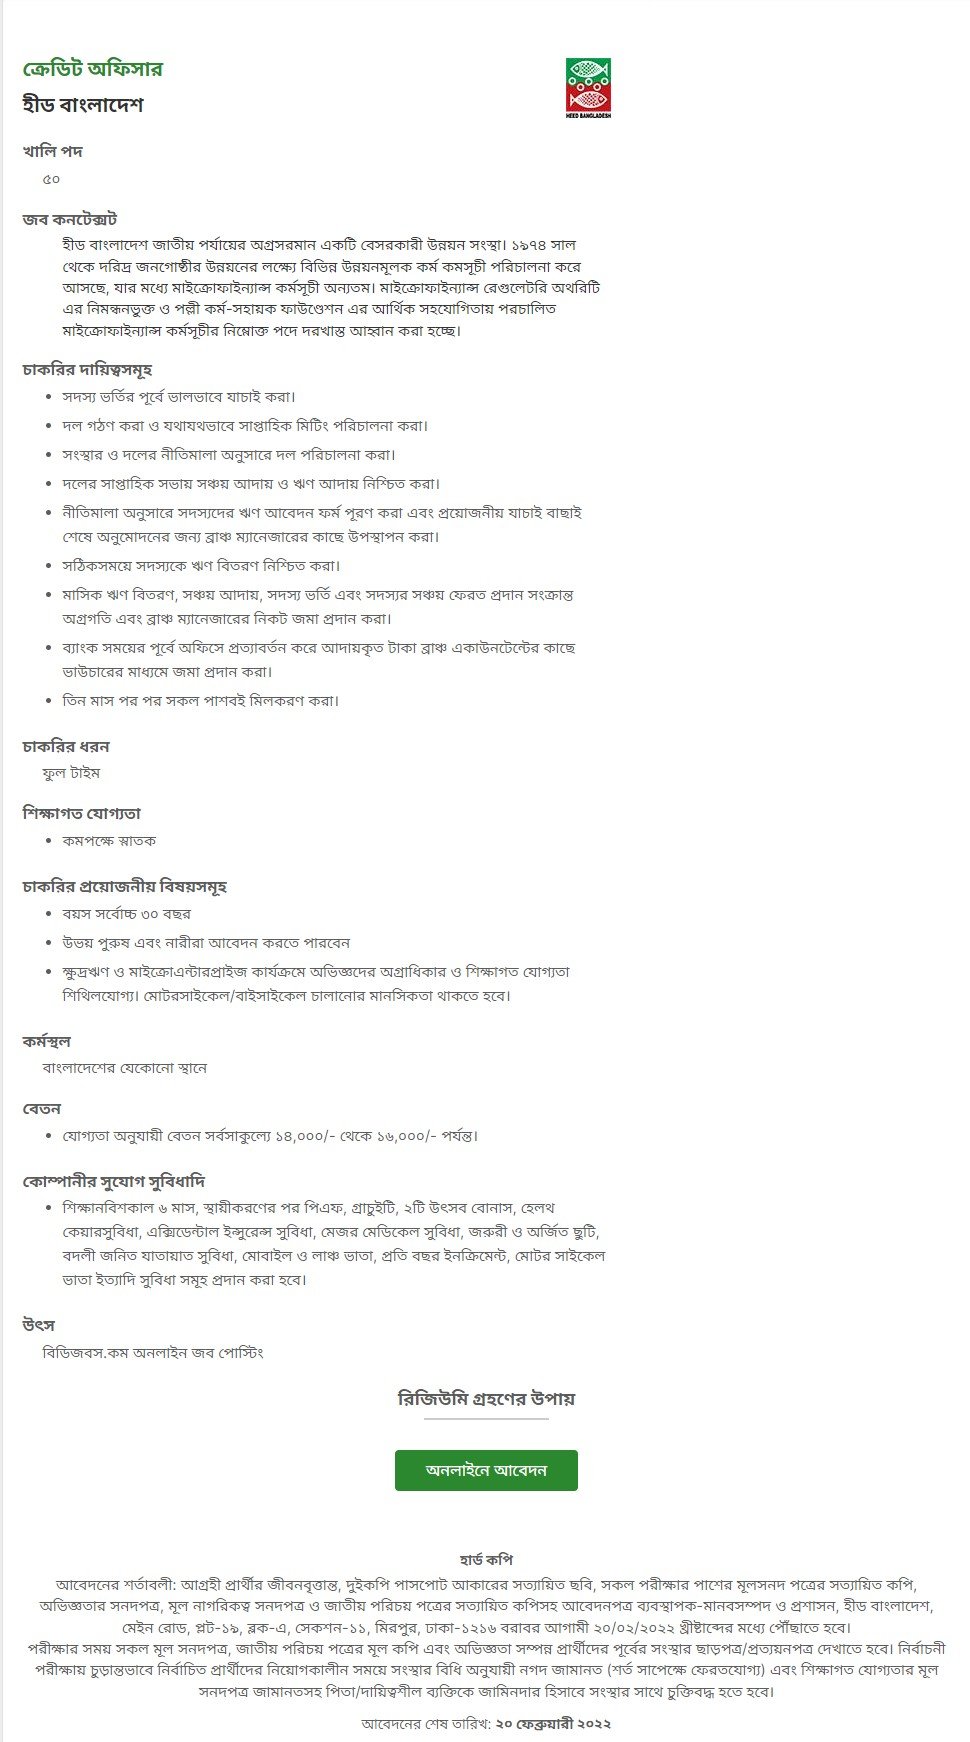 HEED Bangladesh NGO Job Circular 2022 Image & PDF Download